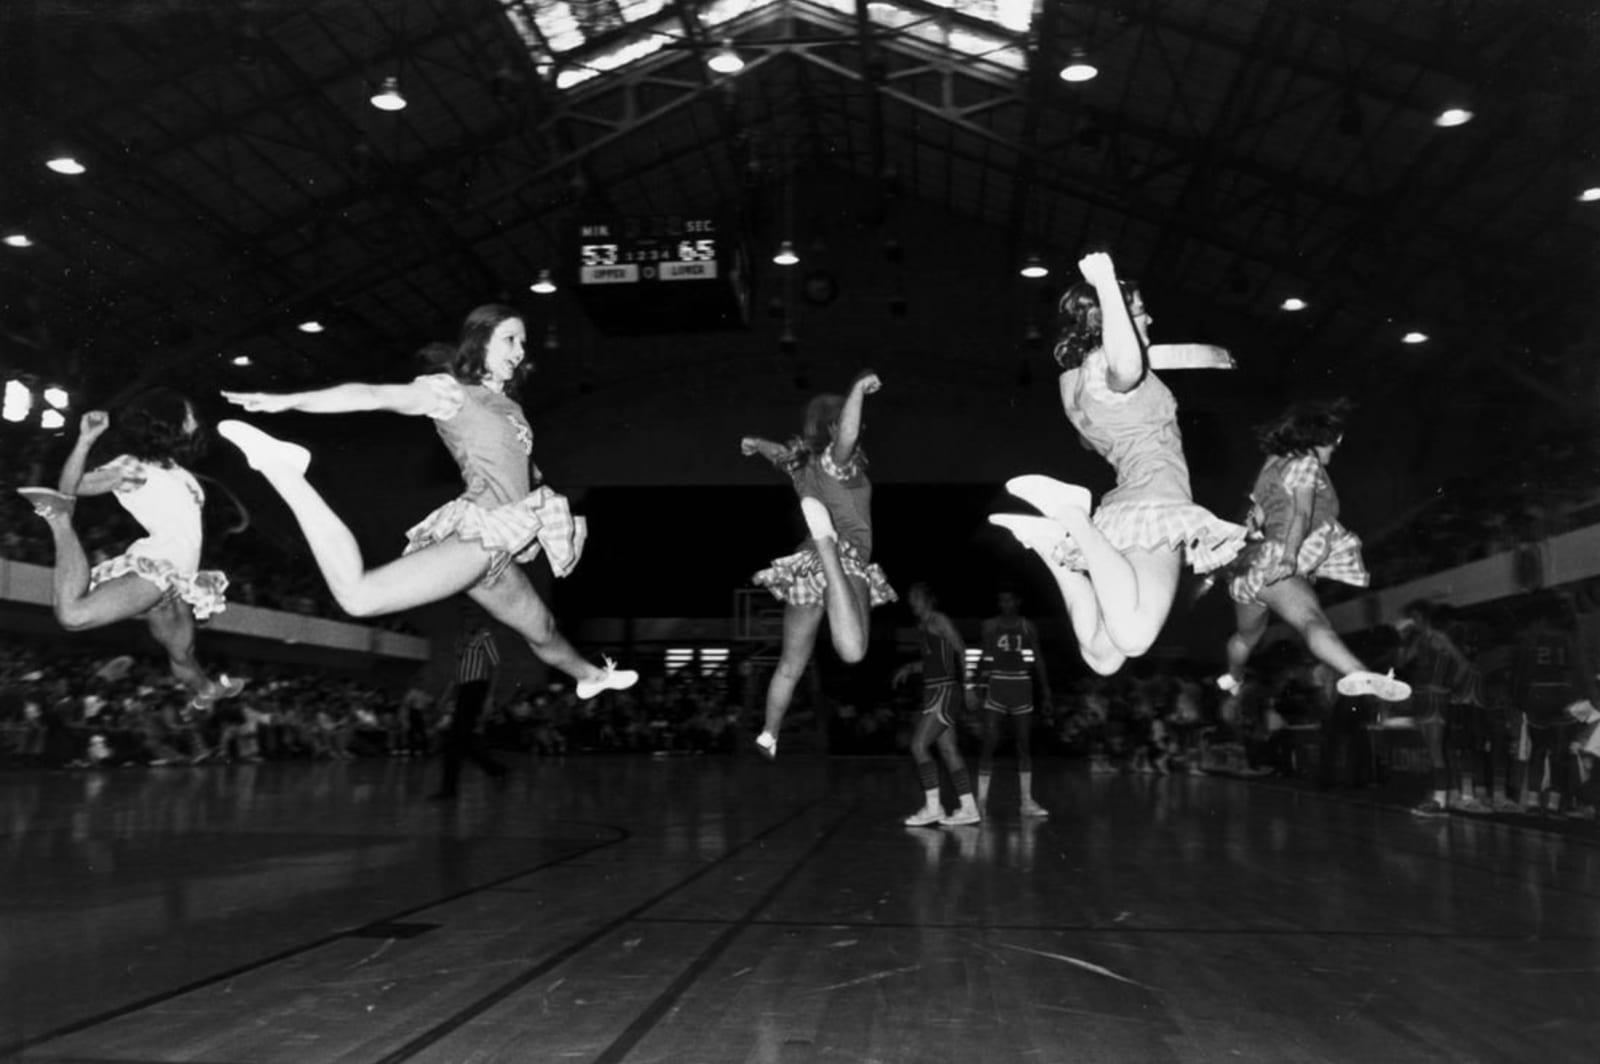 Garry Winogrand Black and White Photograph - Austin, Texas (cheerleaders jumping)